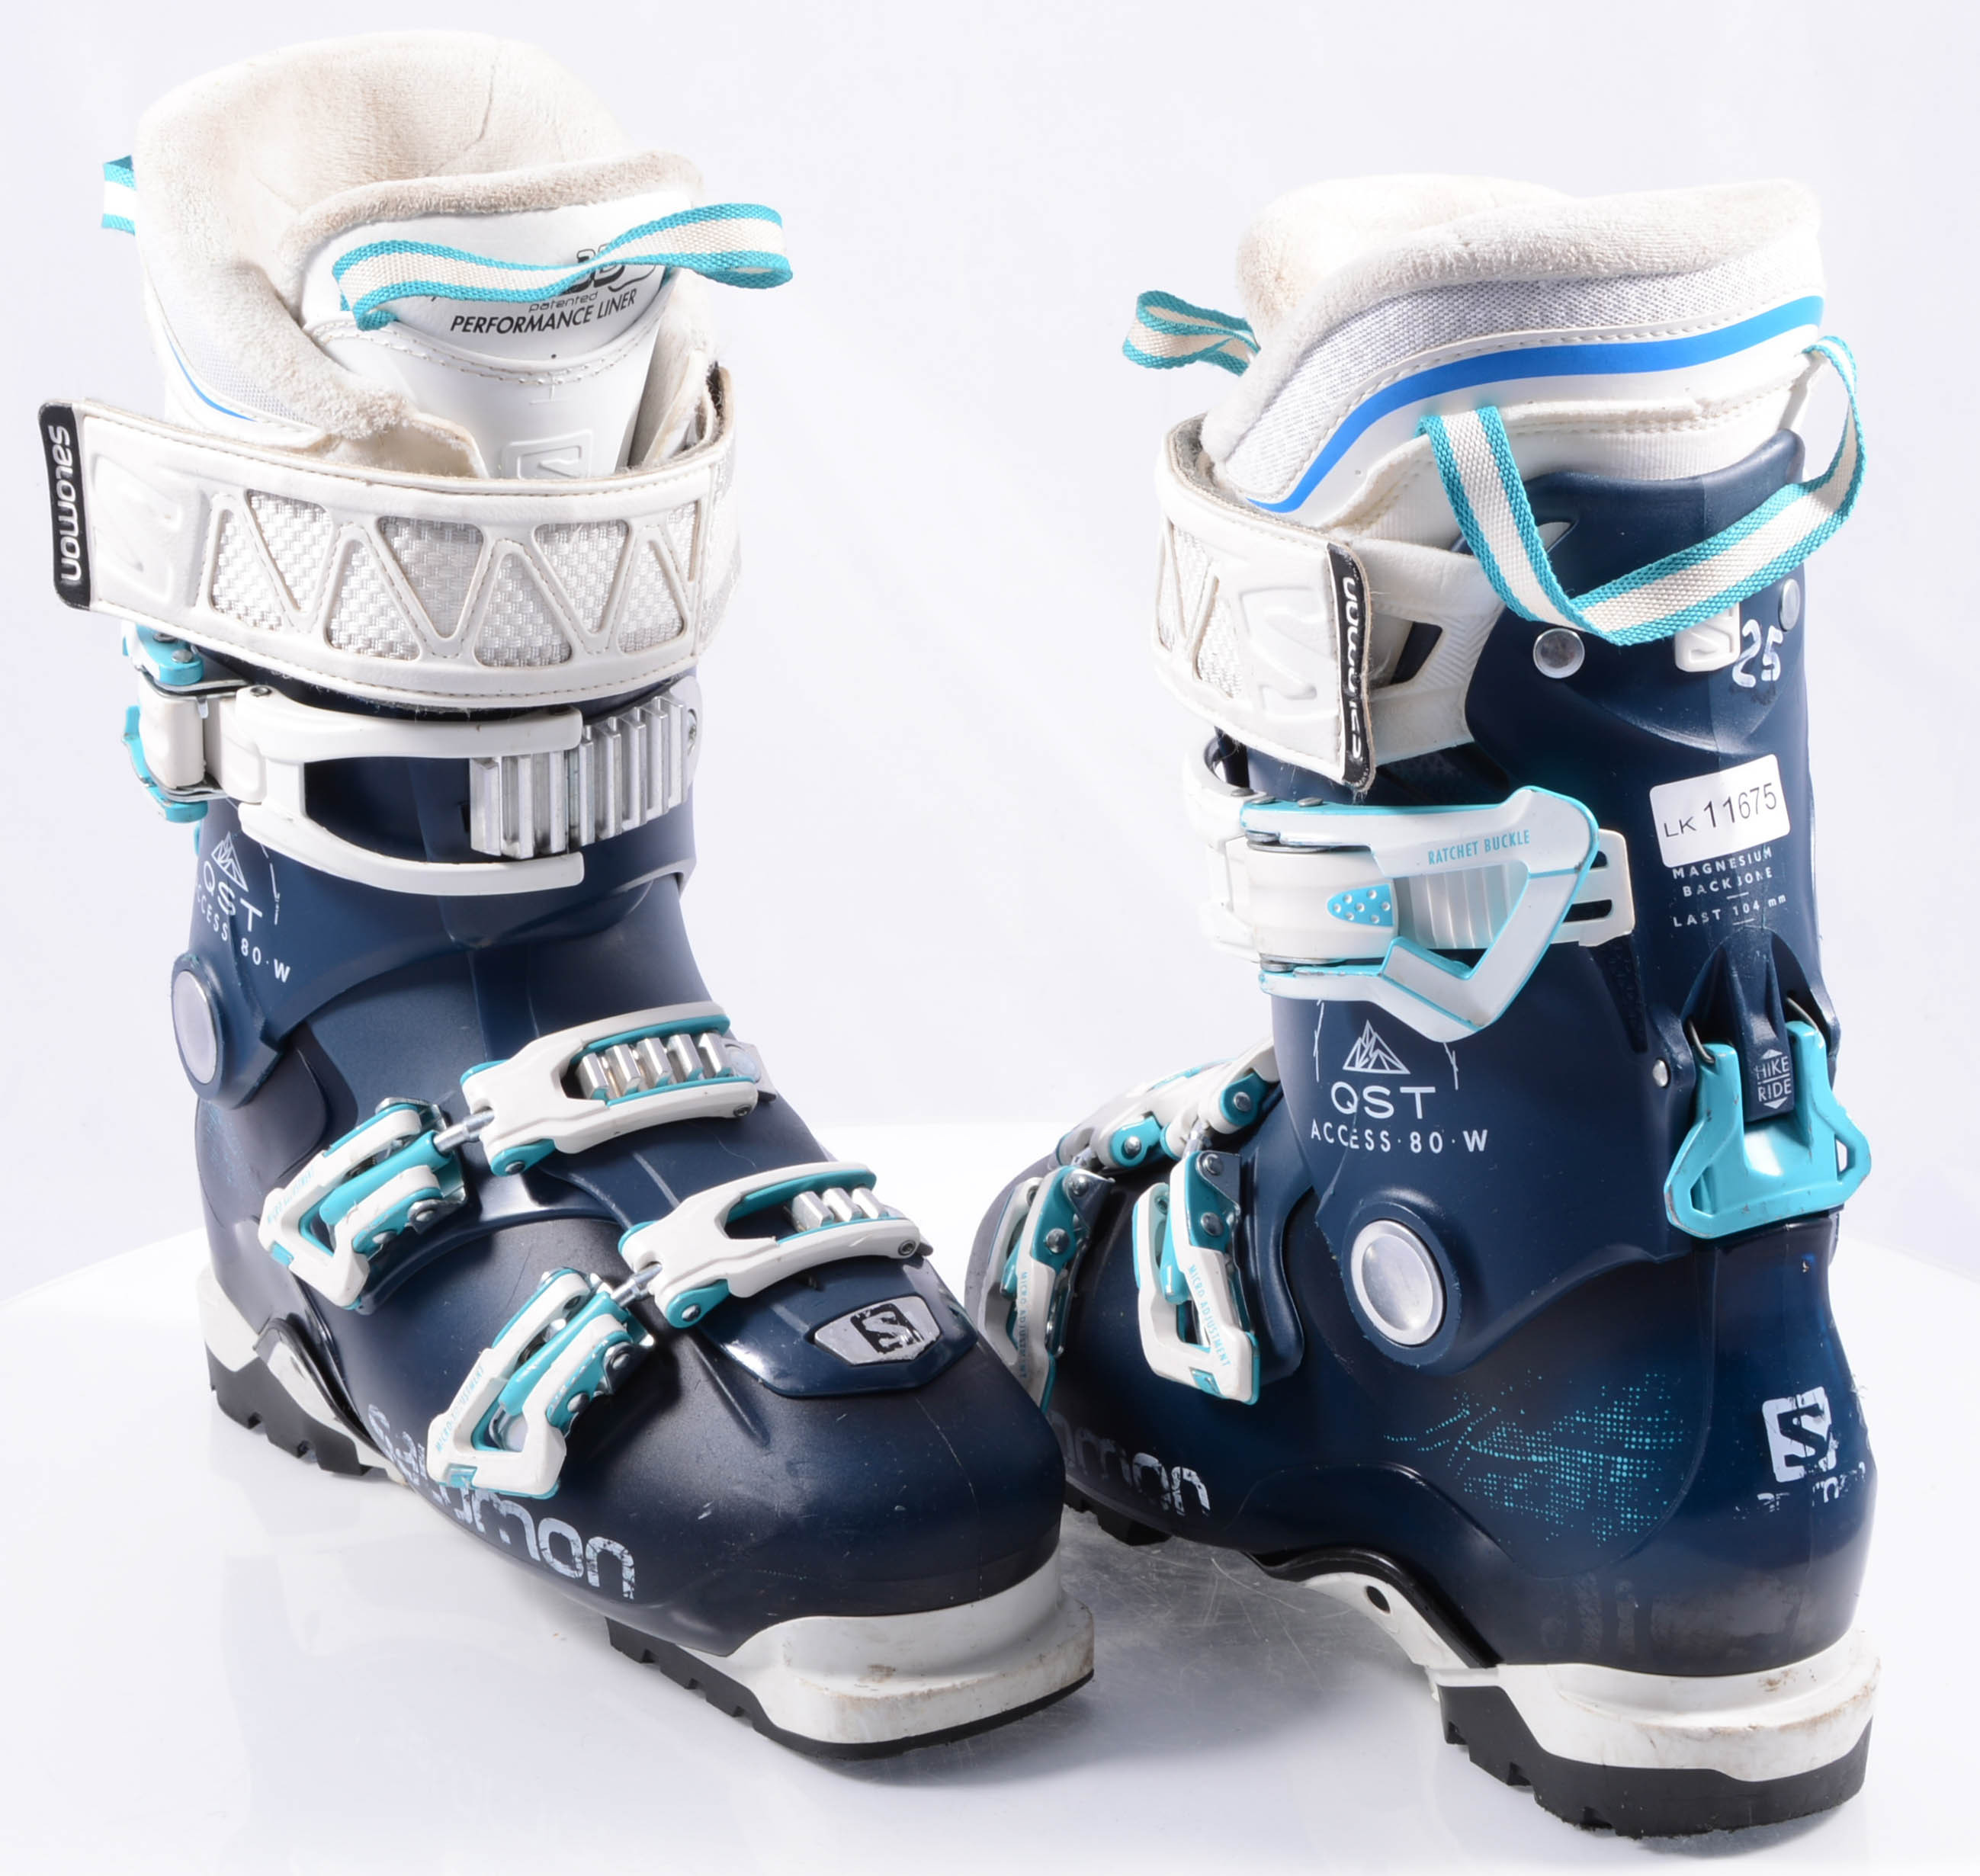 modder limiet zeemijl women's ski boots SALOMON QST ACCESS 80 W 2019, SKI/WALK, ratchet buckle,  micro, dark blue/white - Mardosport.com